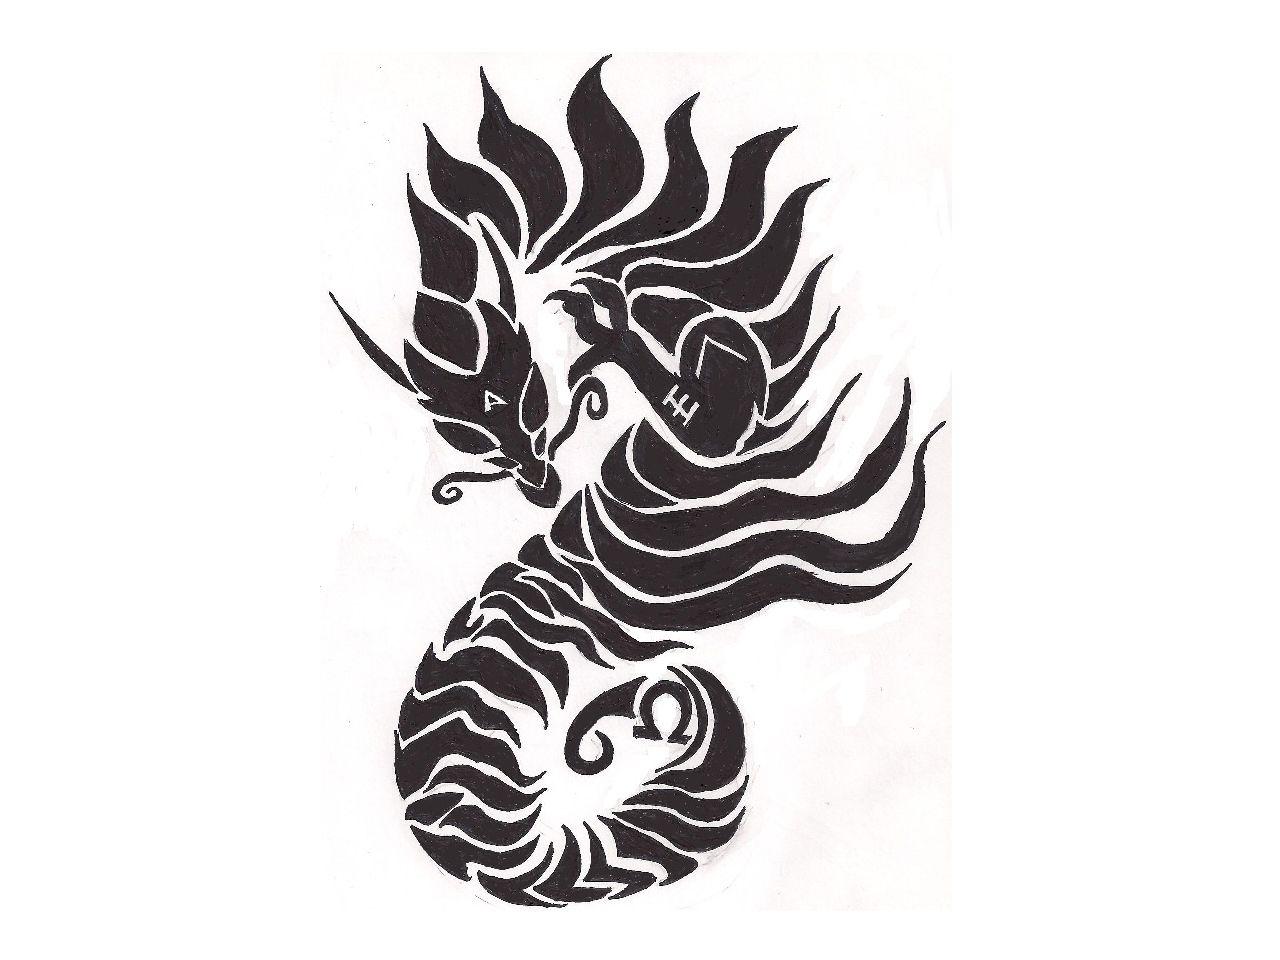 Dragon Tattoo Wallpaper, Image, Wallpaper of Dragon Tattoo in High